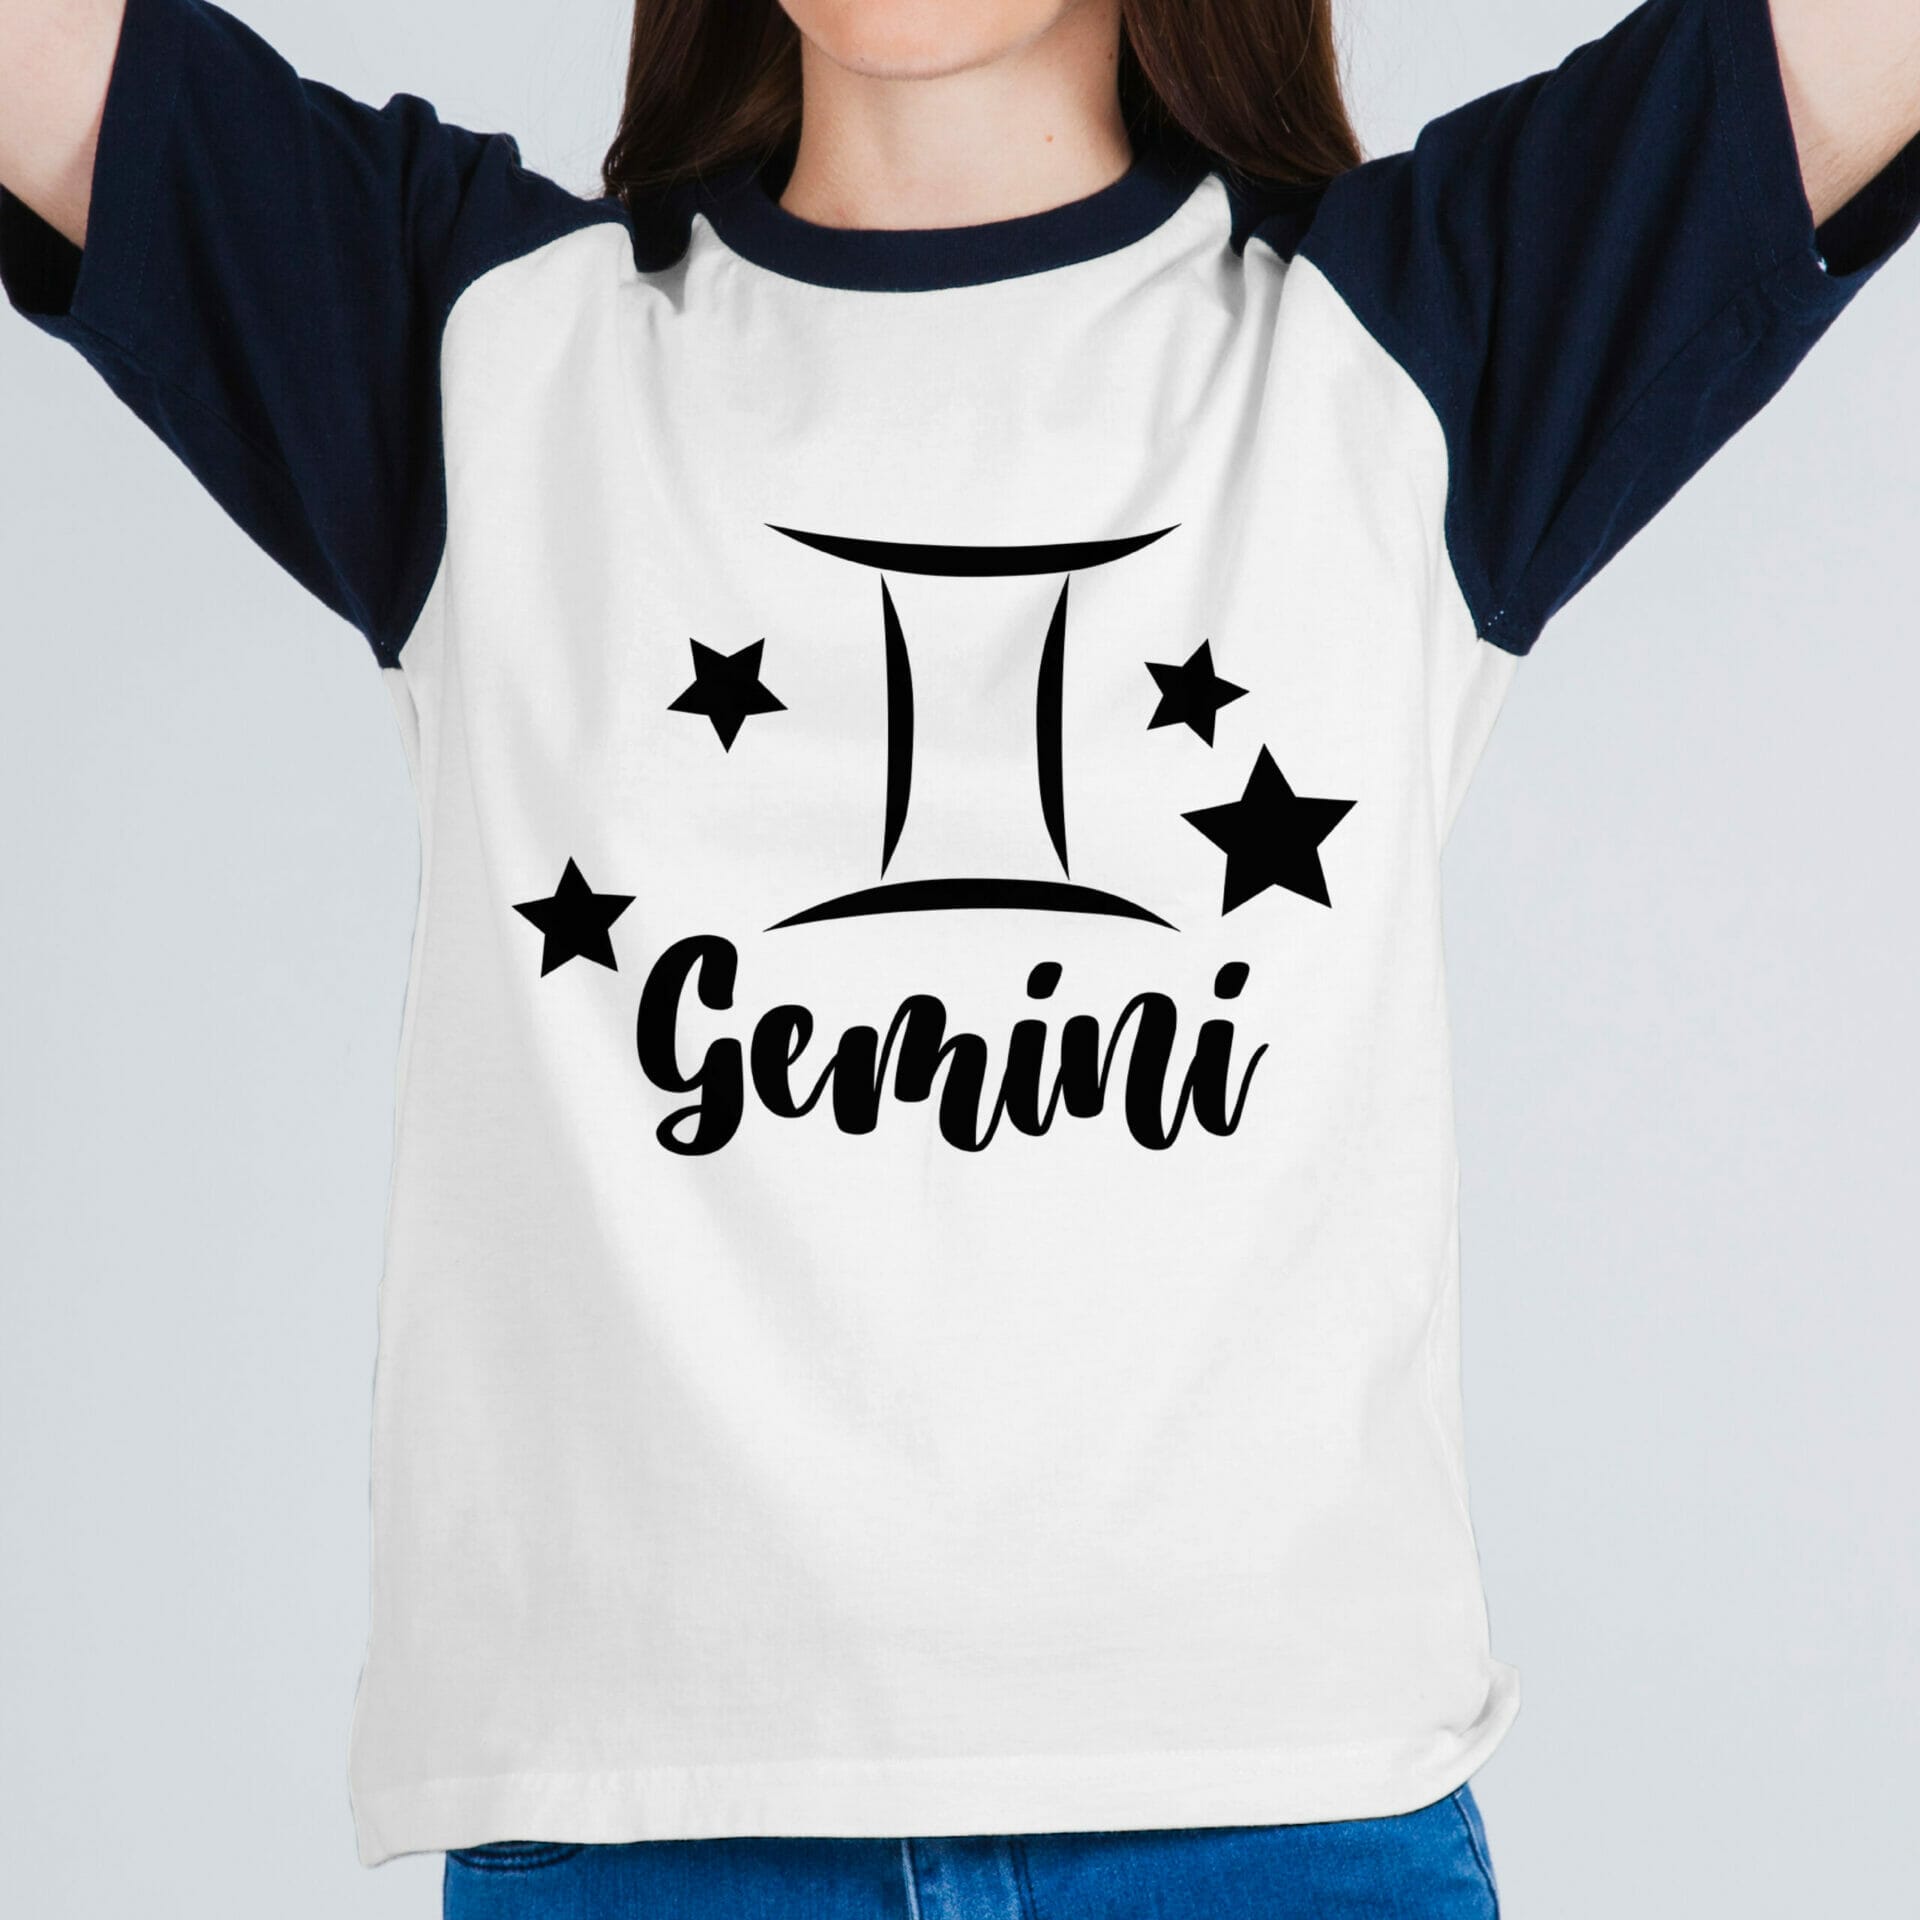 Gemini Horoscope Tshirt Design